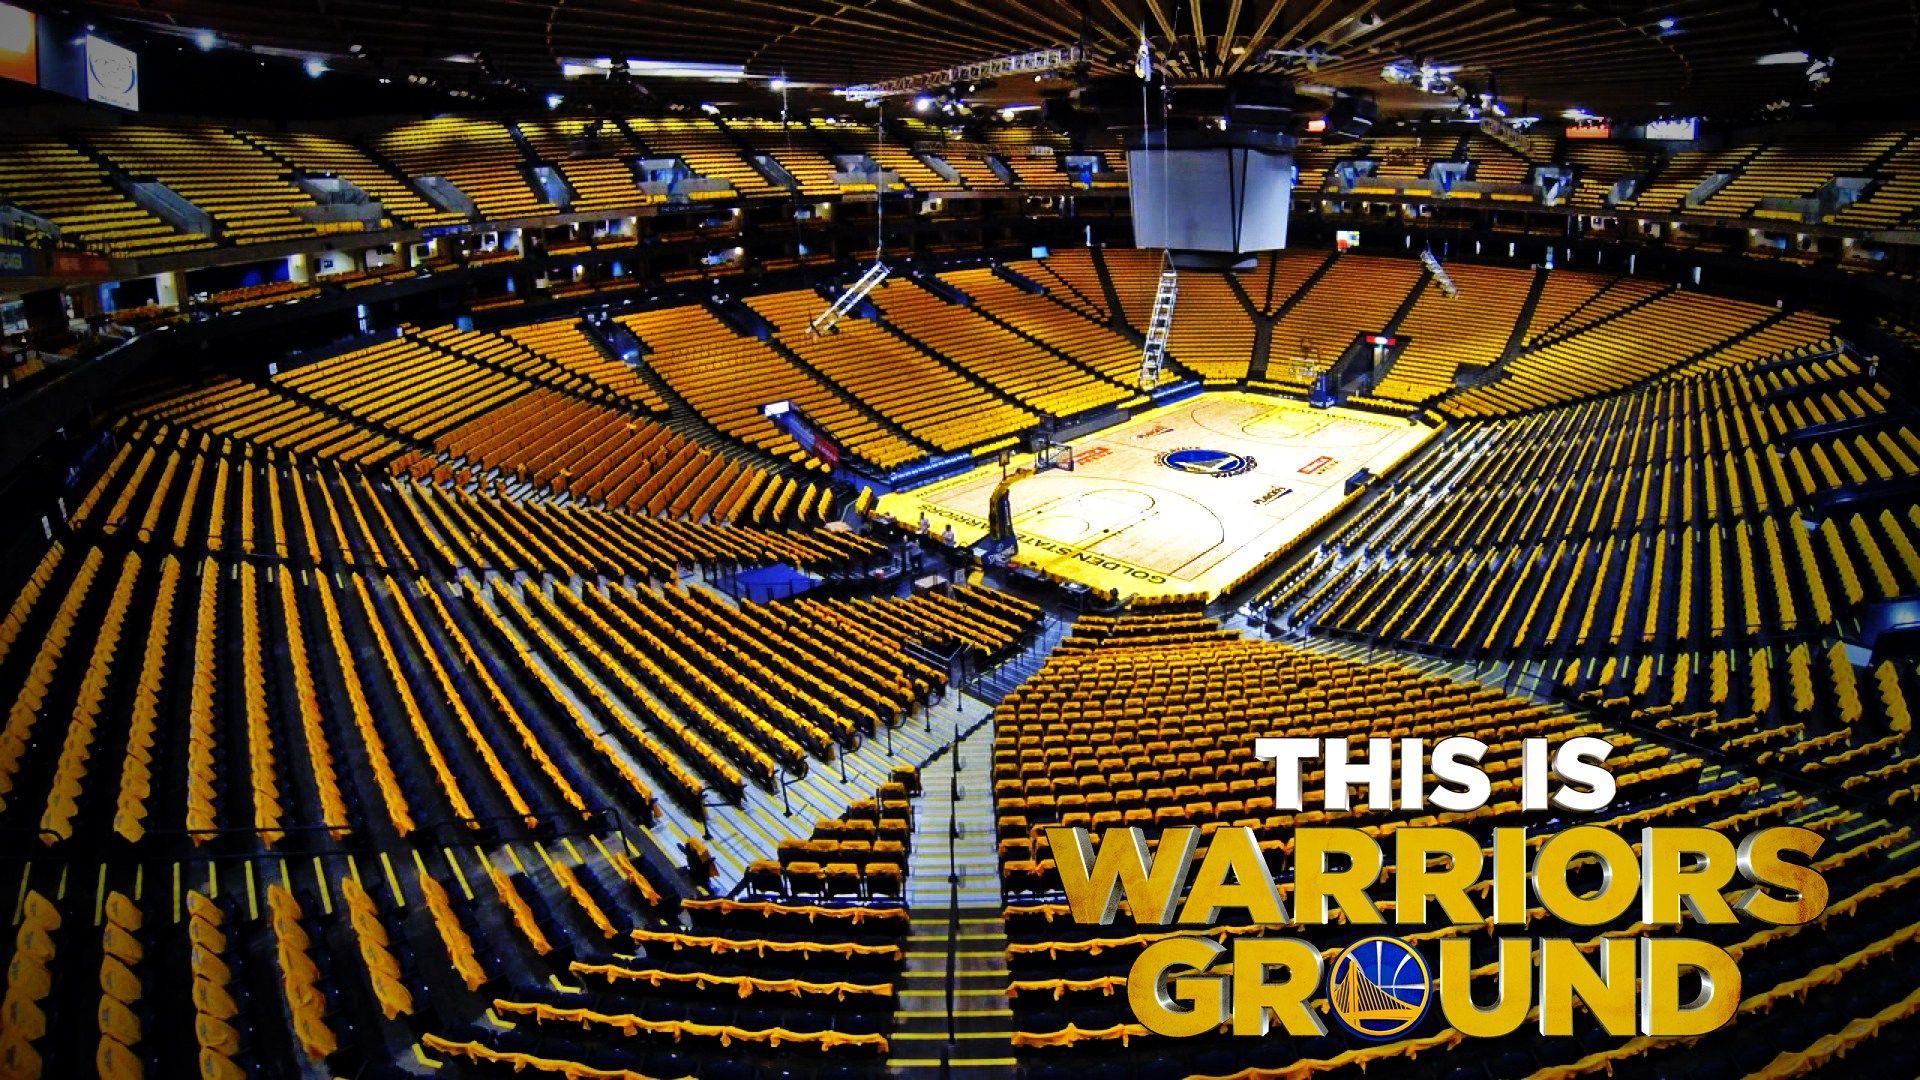 Golden State Warriors NBA Arena wallpaper 2018 in Basketball